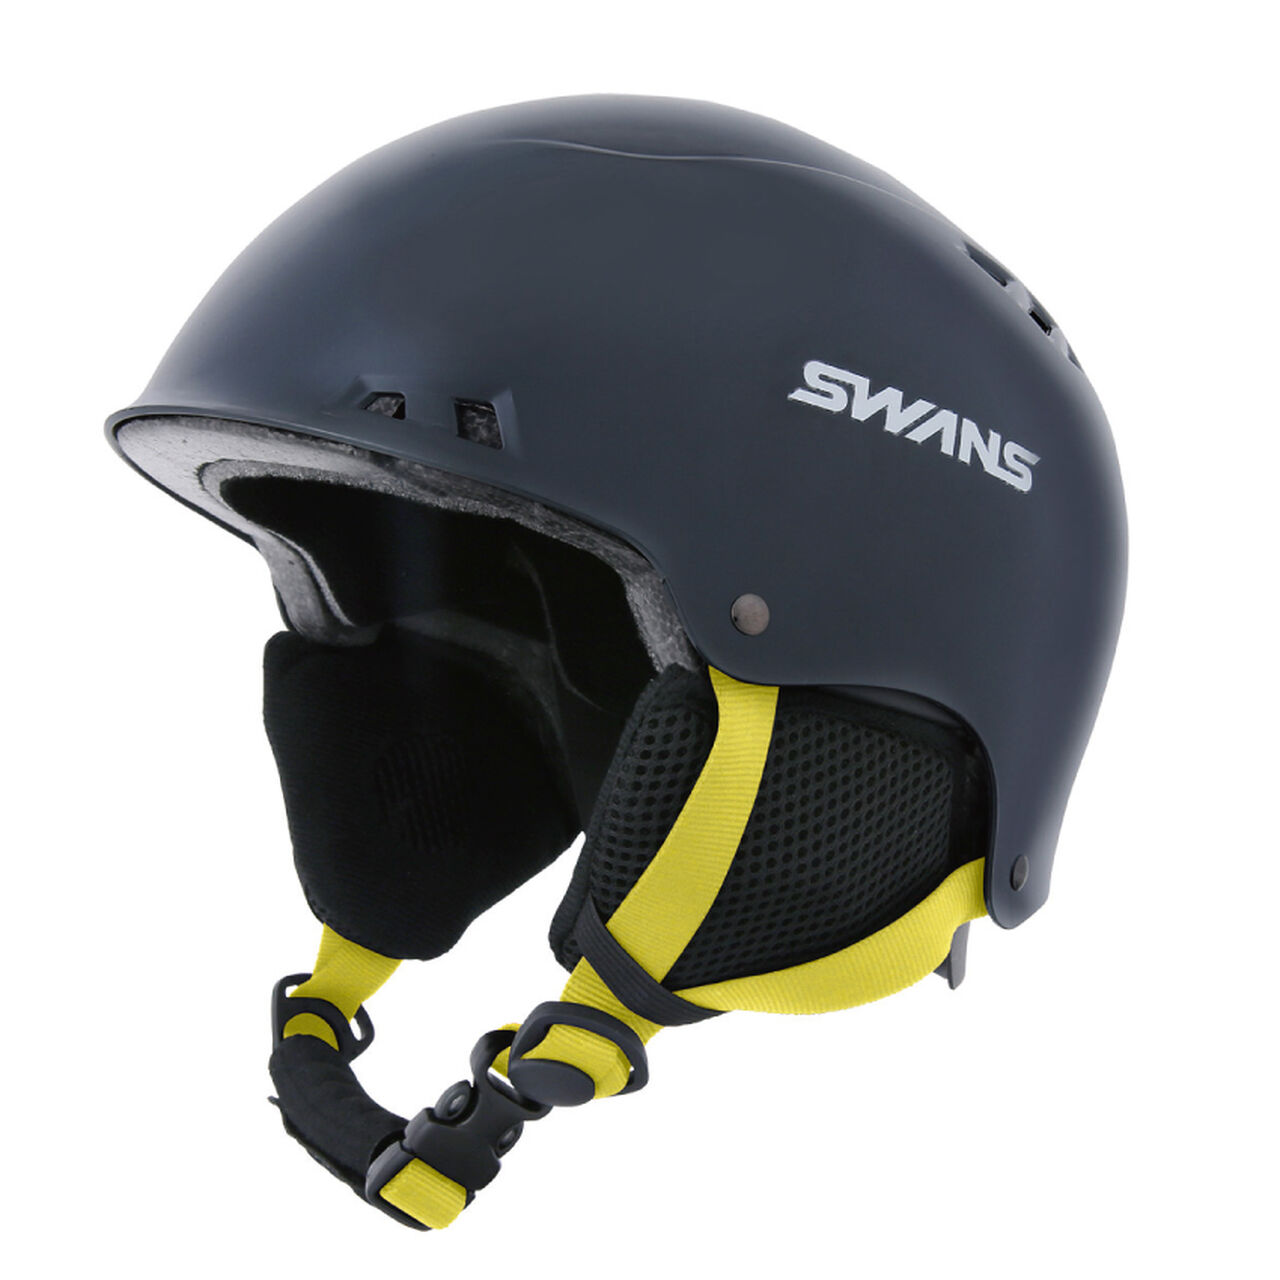 H-461R snow helmet Black S size,Opt1, large image number 0